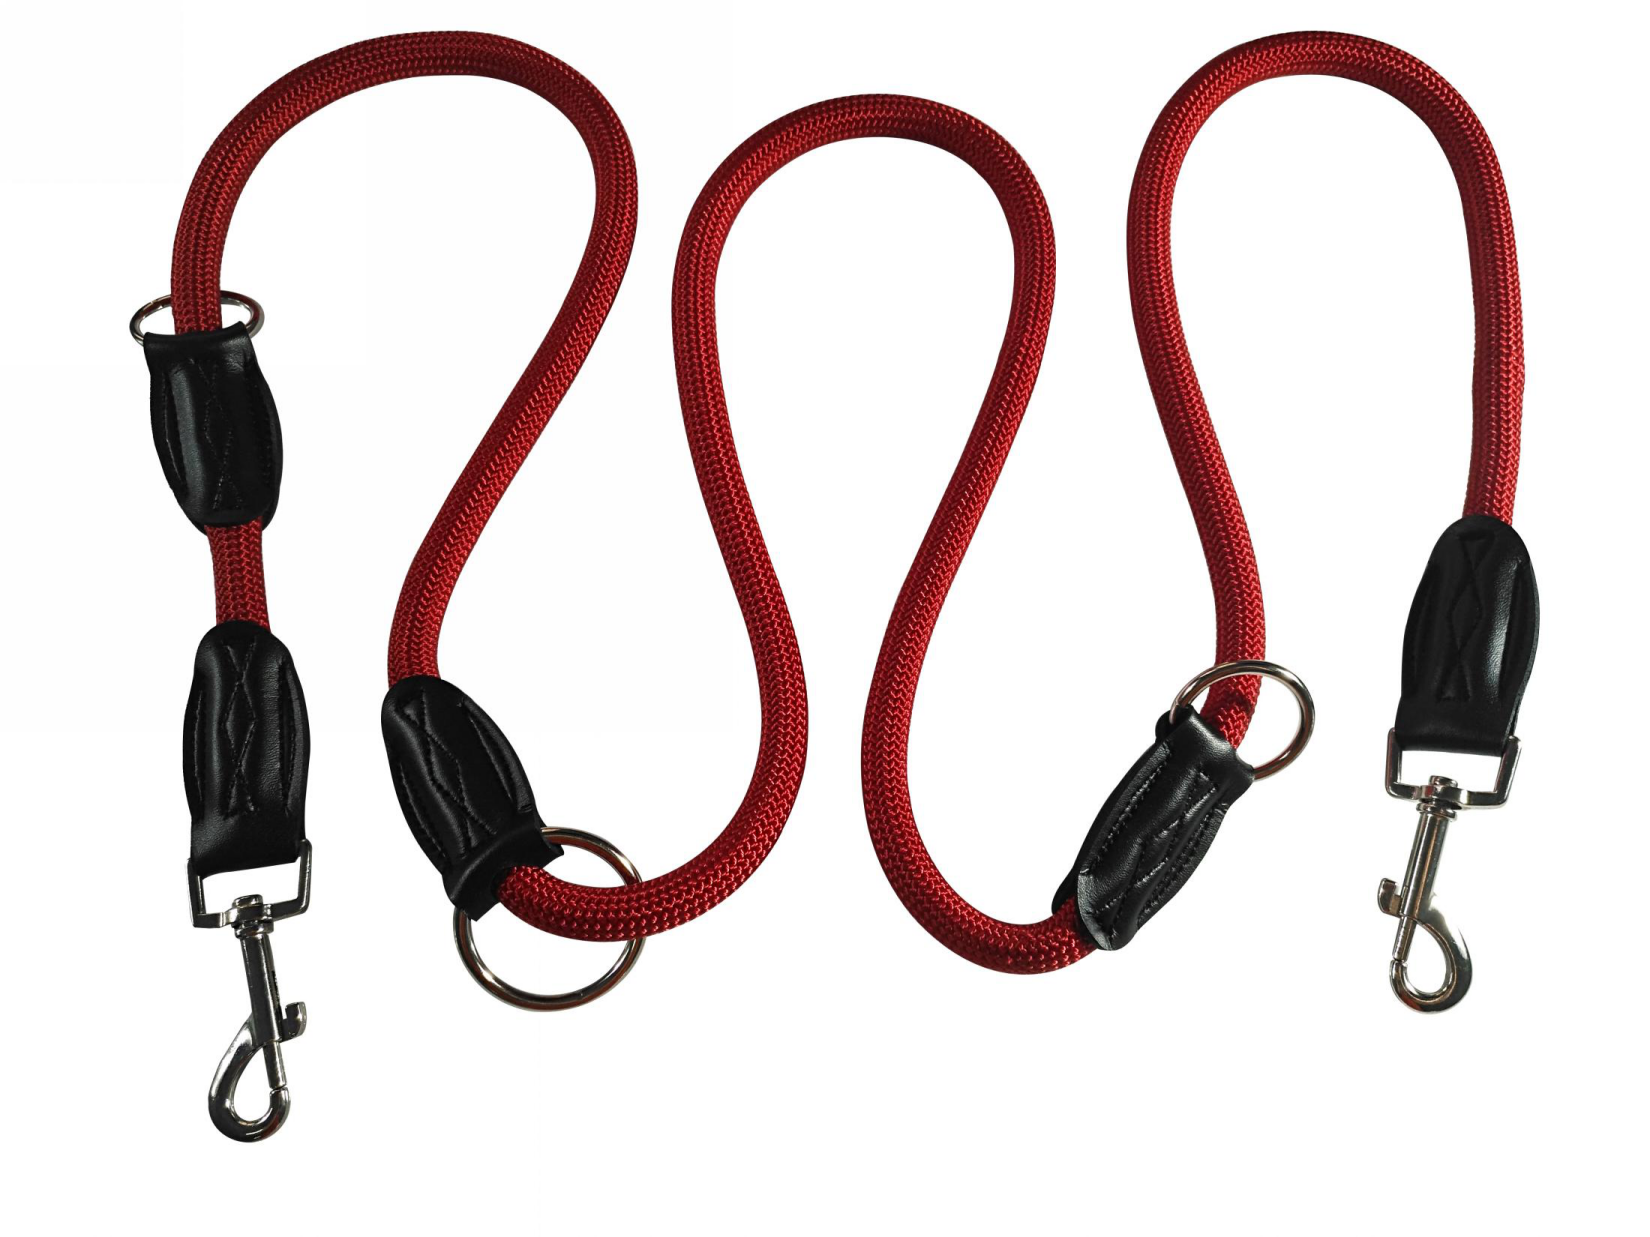 Two - headed hook dog leash